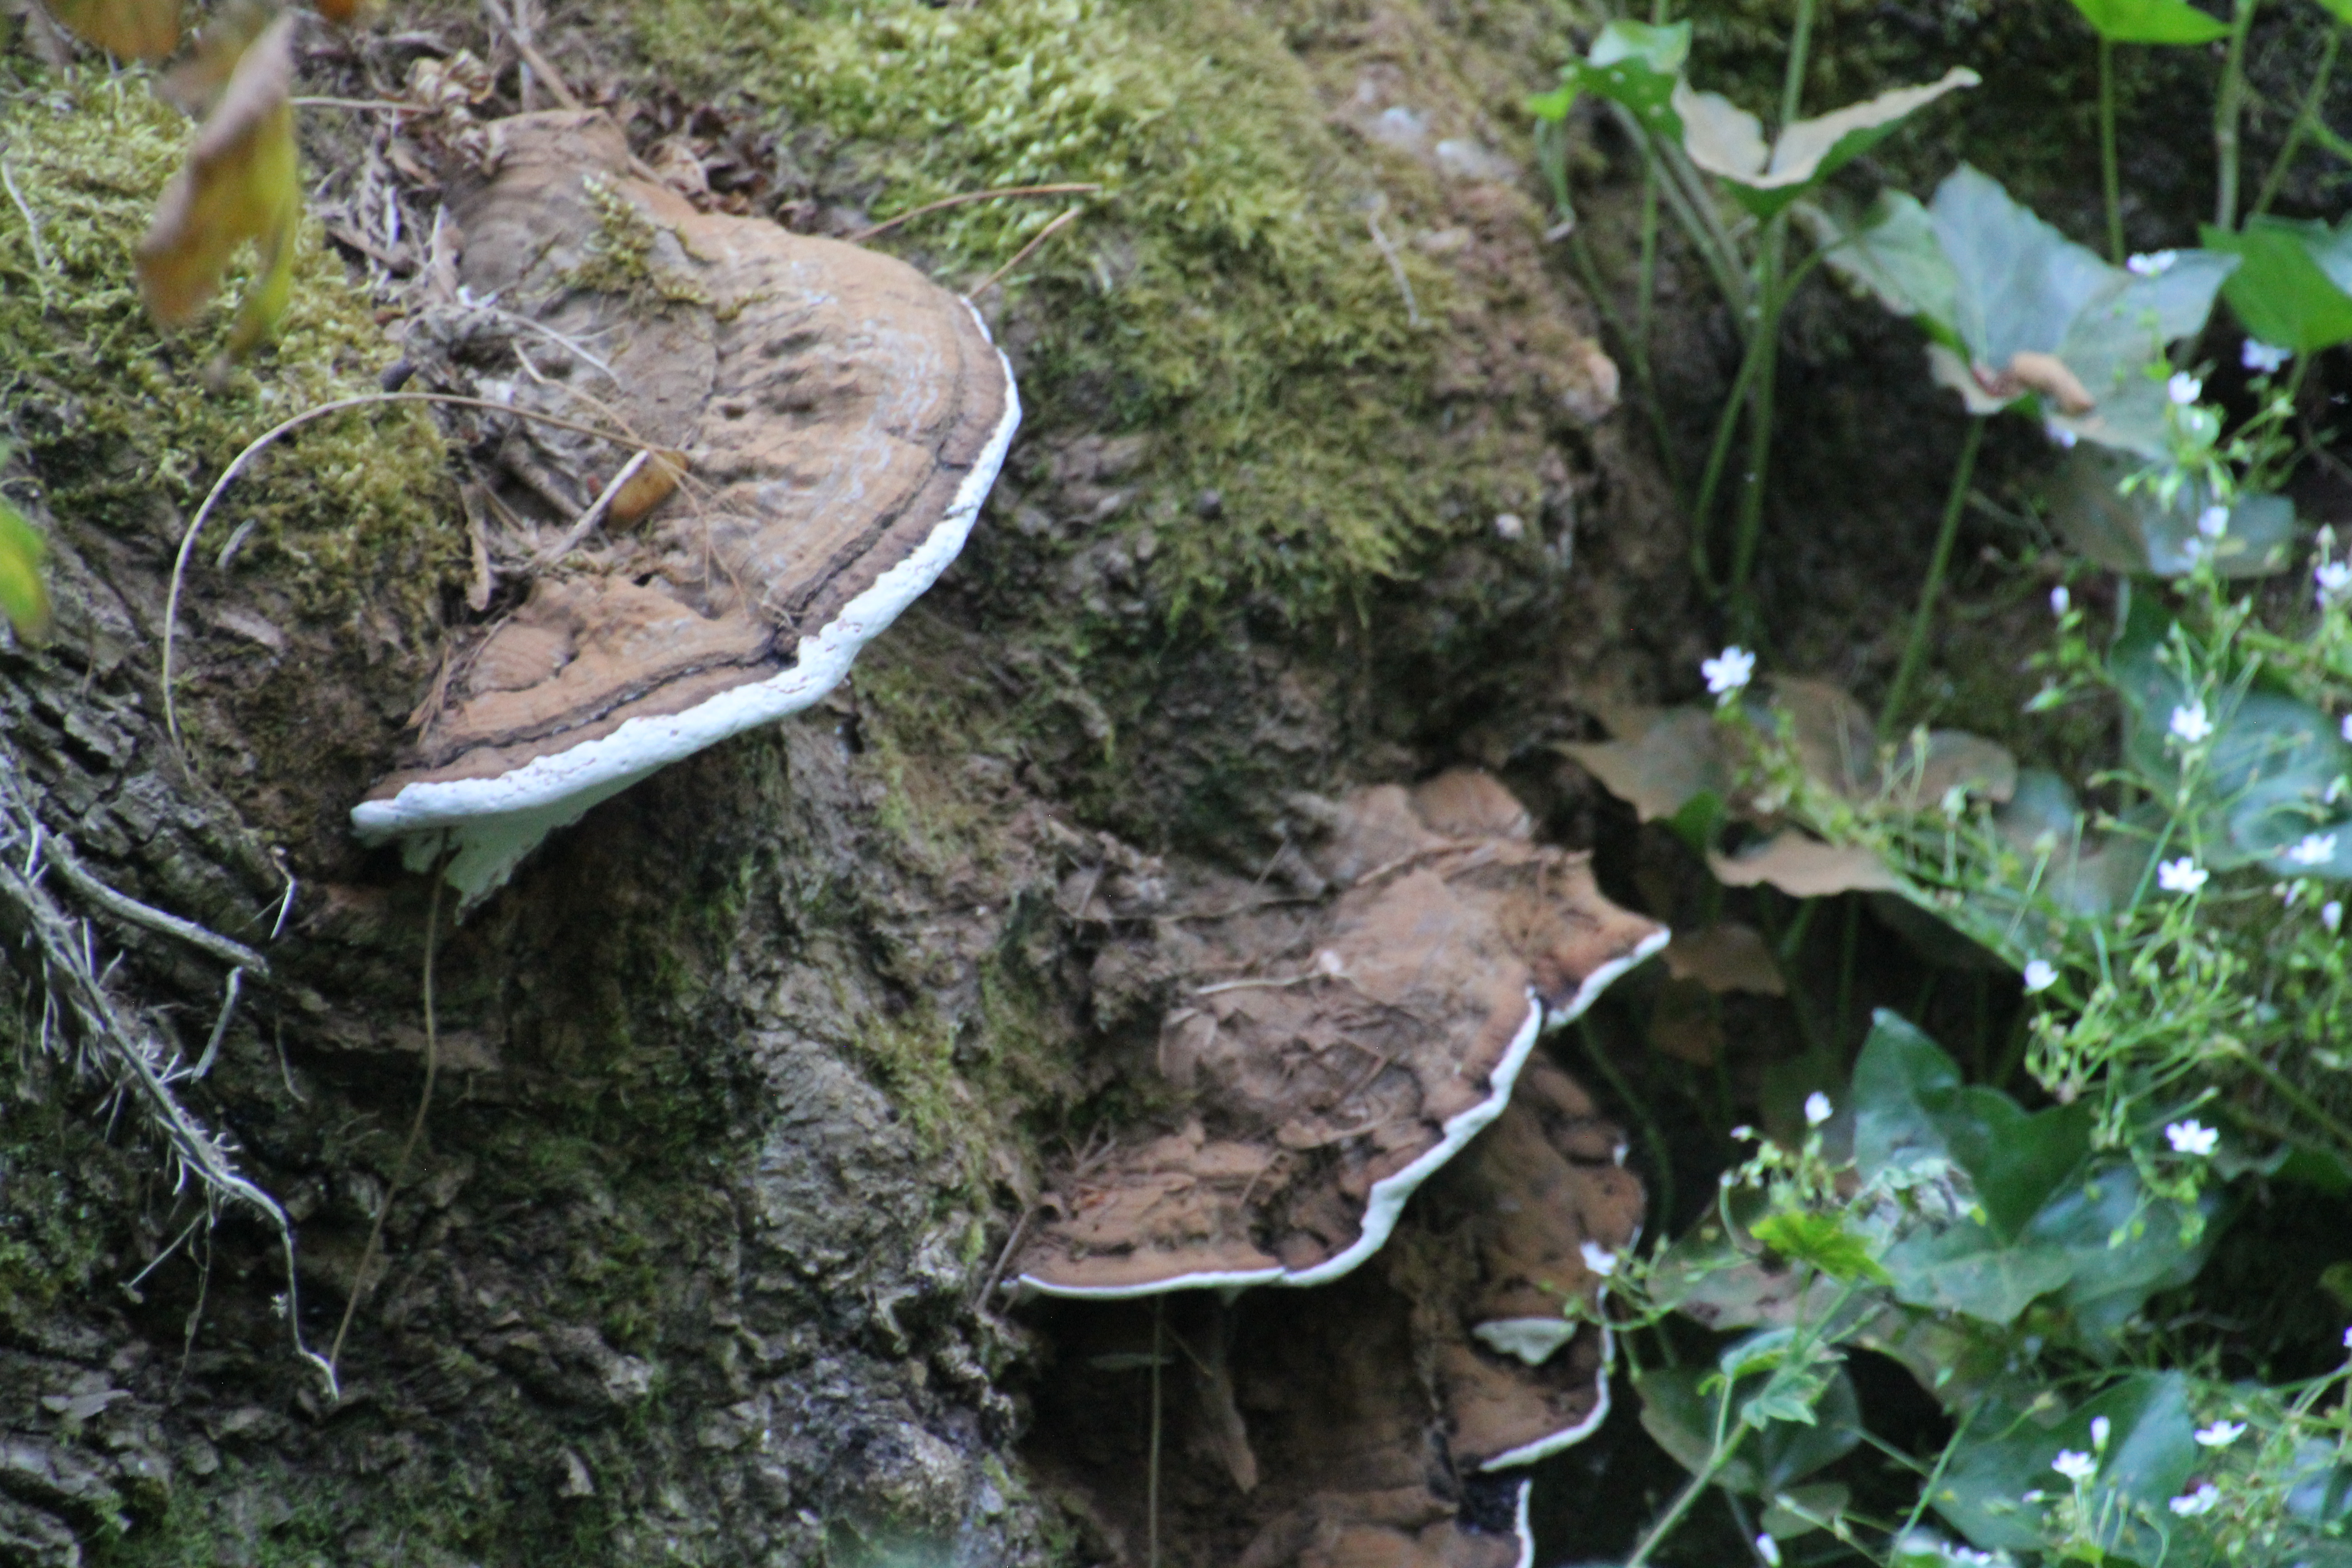 Cluster of Mushrooms on a Log